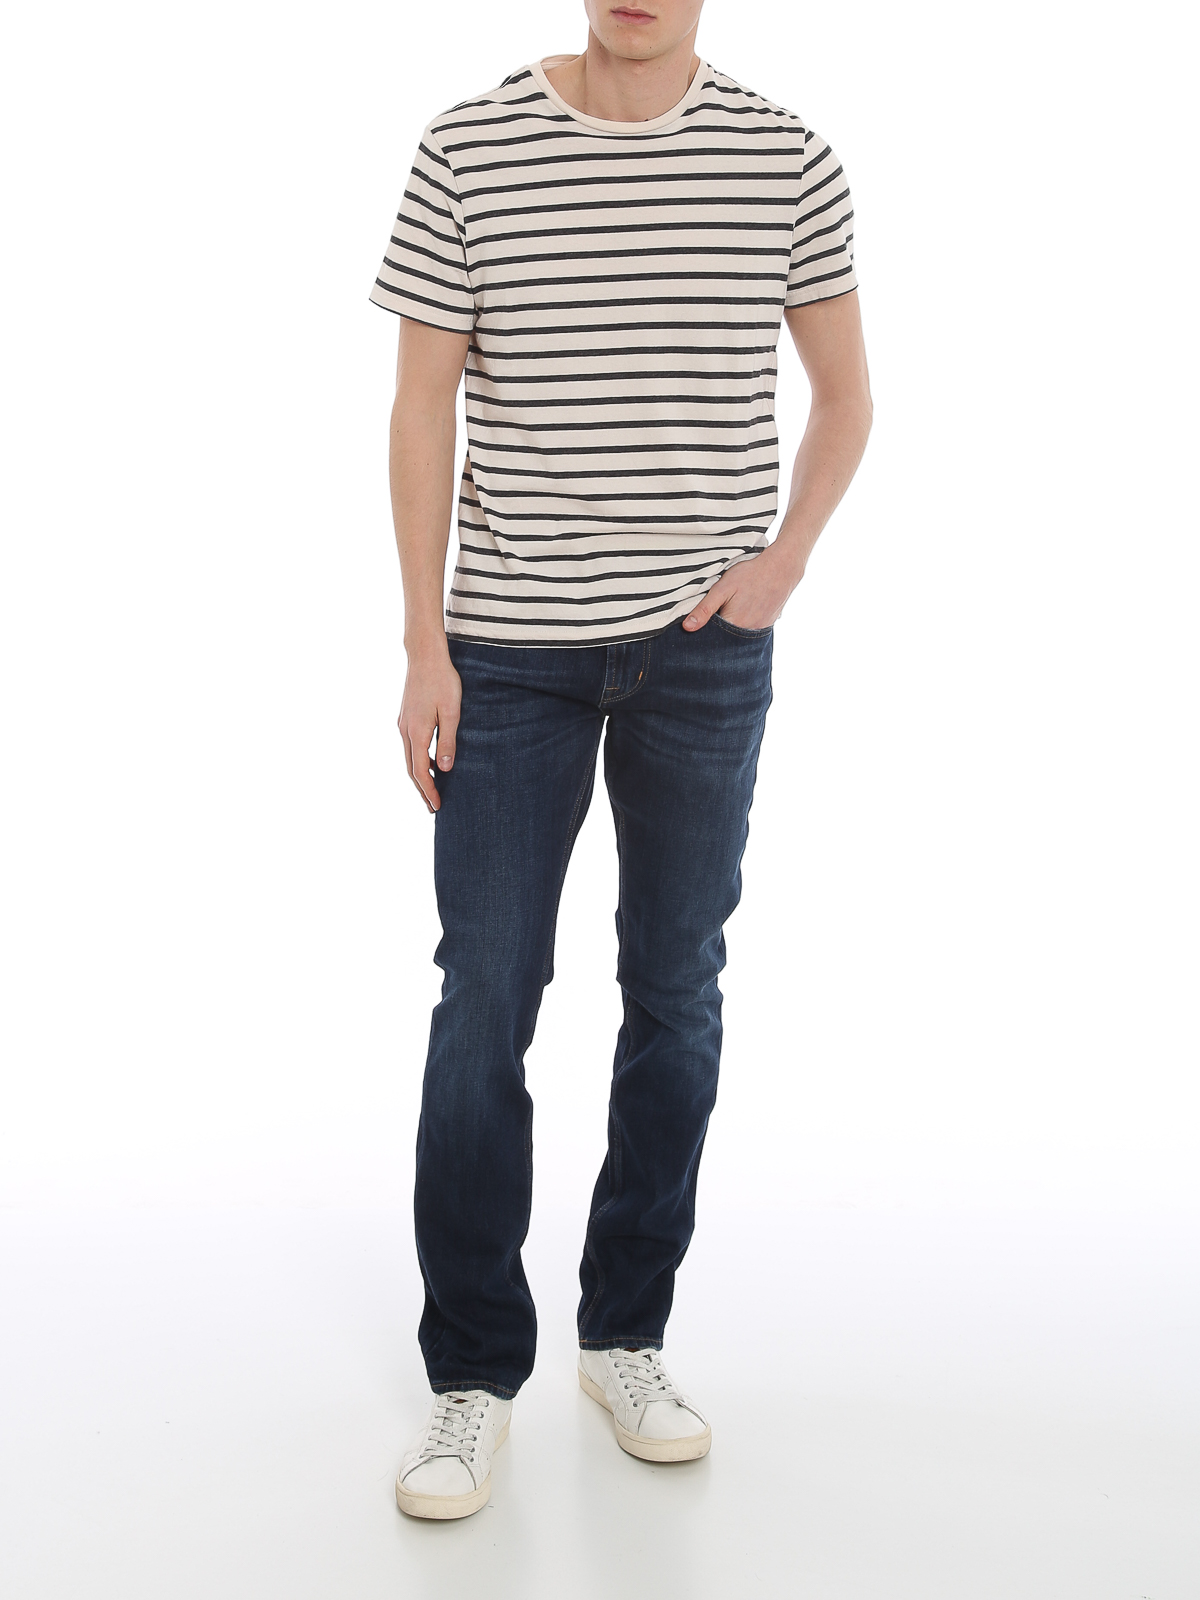 radicaal Ongrijpbaar ontwerper Skinny jeans 7 For All Mankind - Ronnie Dorado jeans - JSD4L390DR